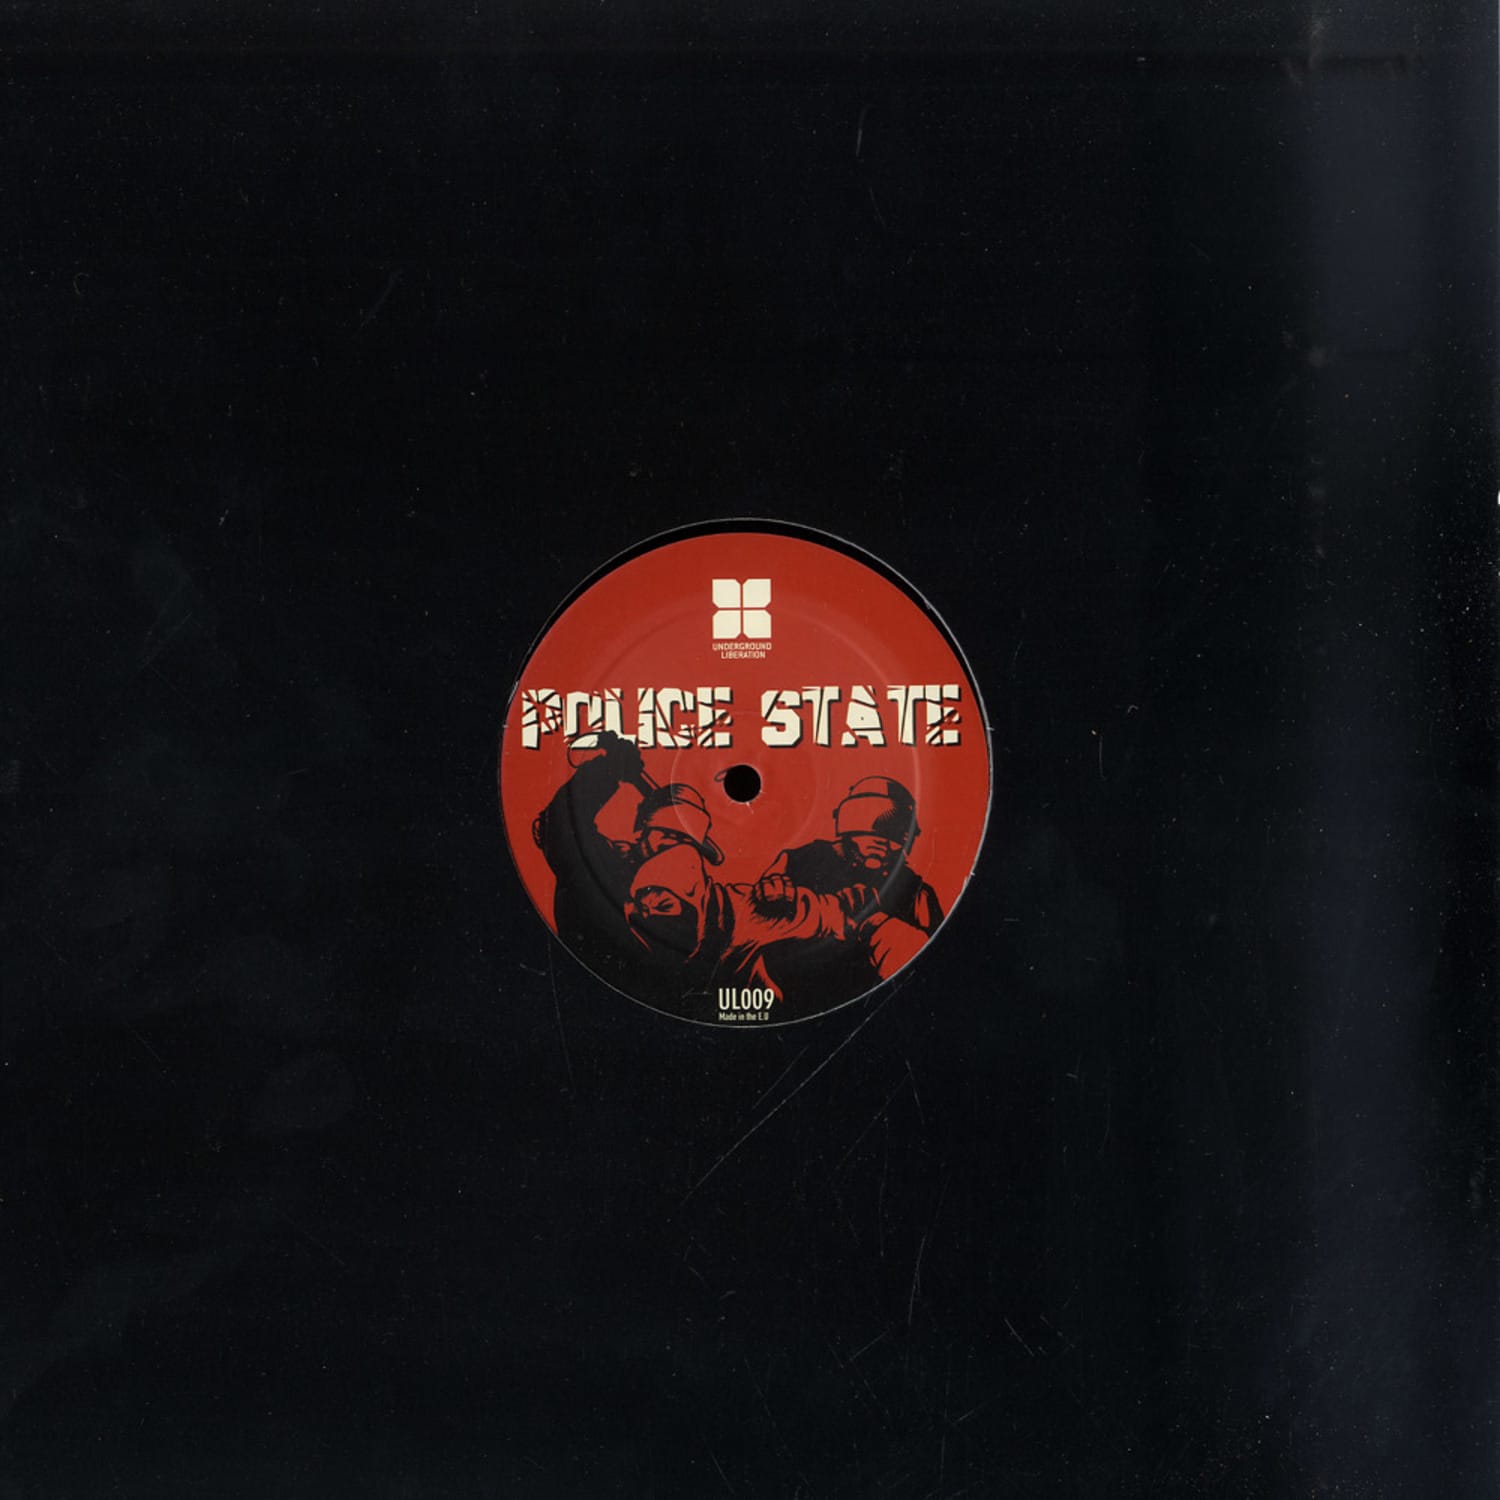 Paul Mac / Carlos Rios / Ritzi Lee - POLICE STATE EP